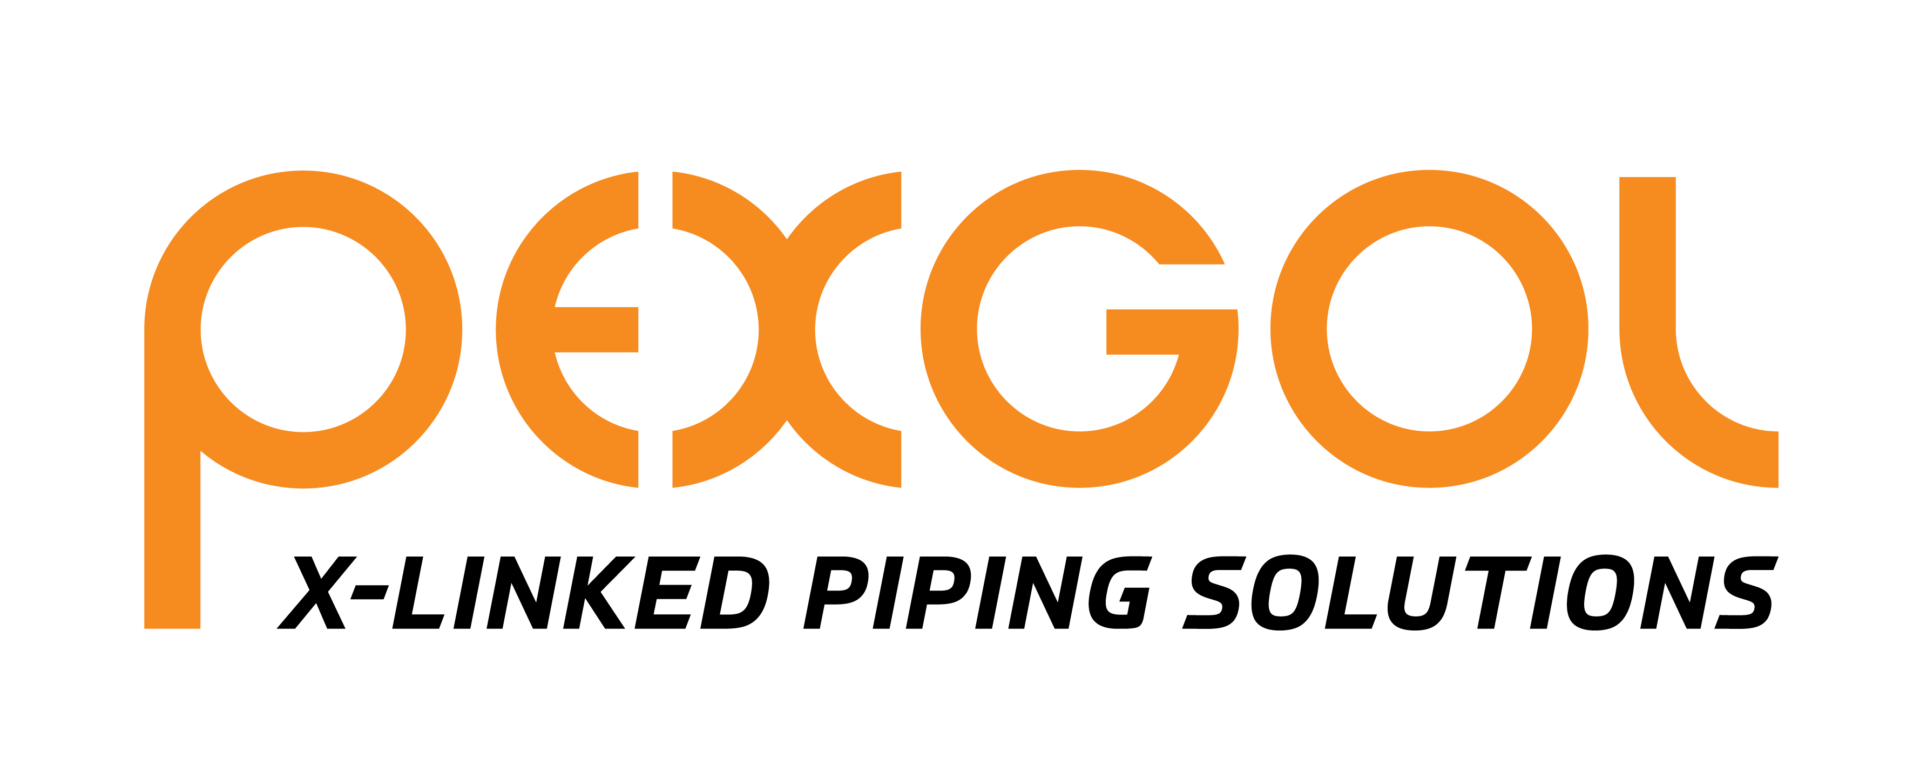 pexgol-logo